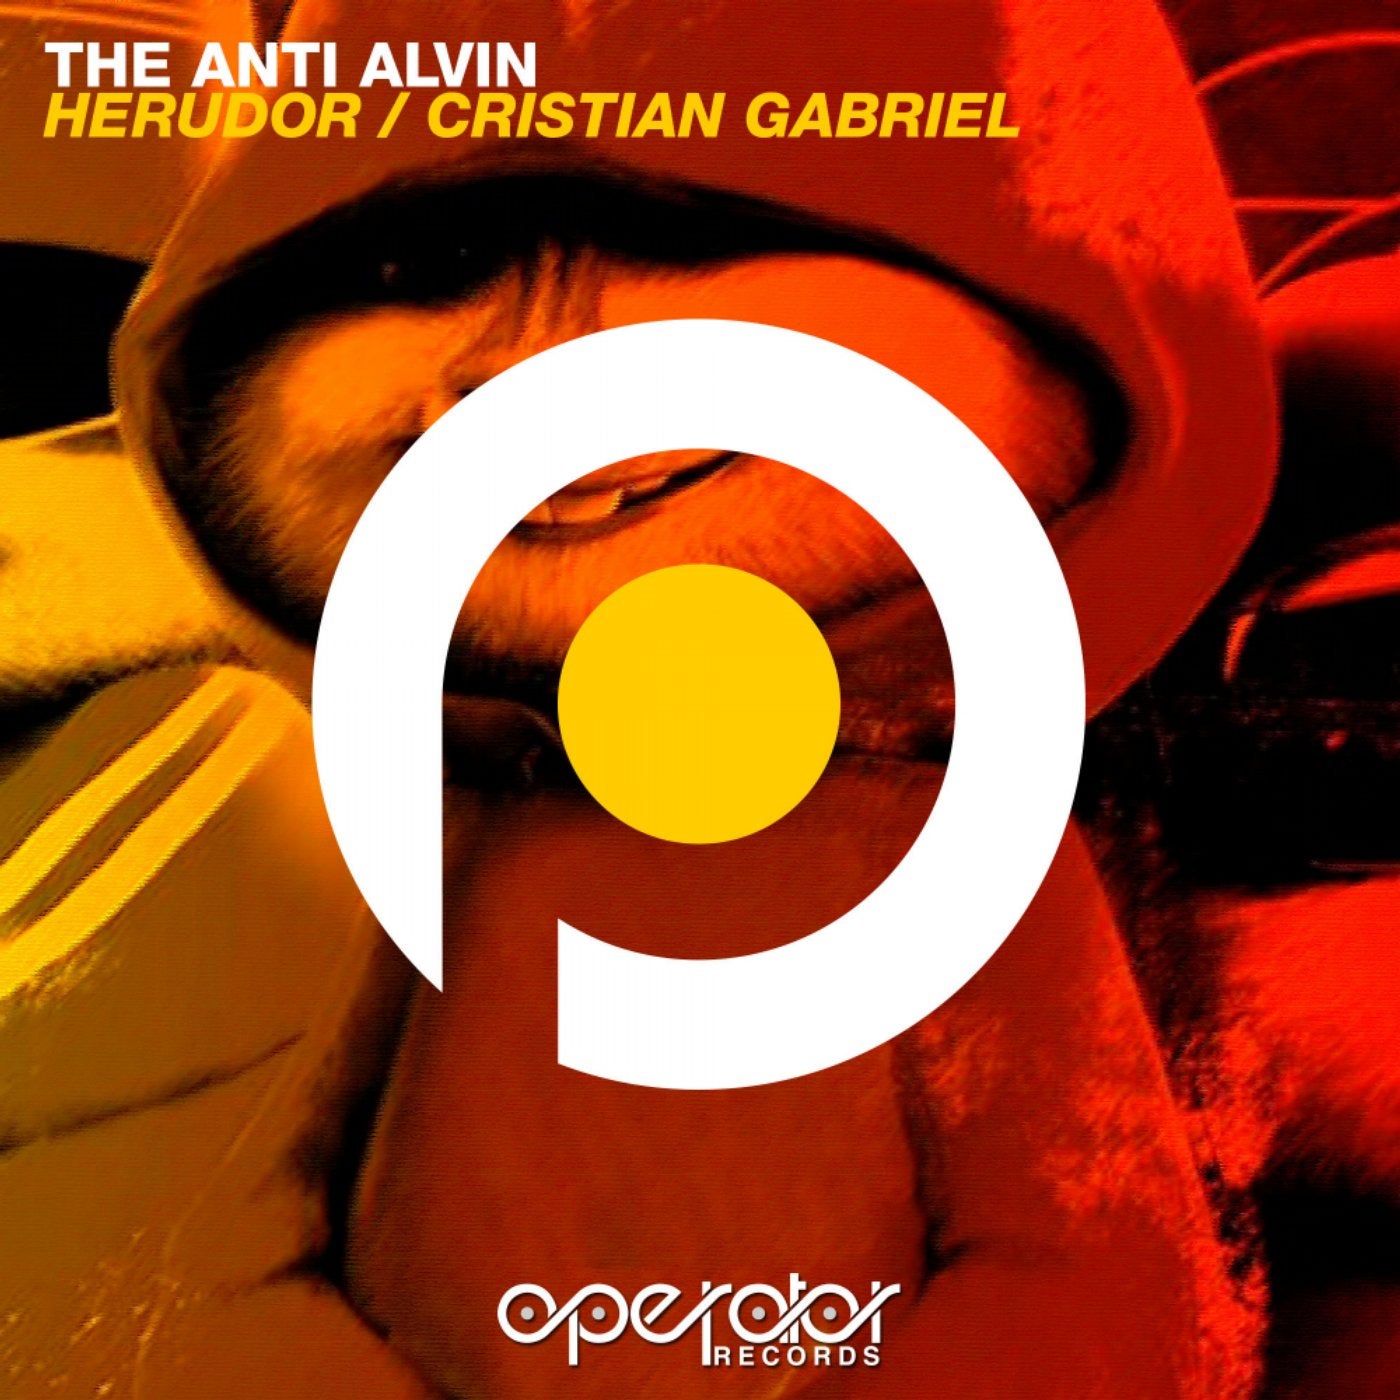 The Anti Alvin